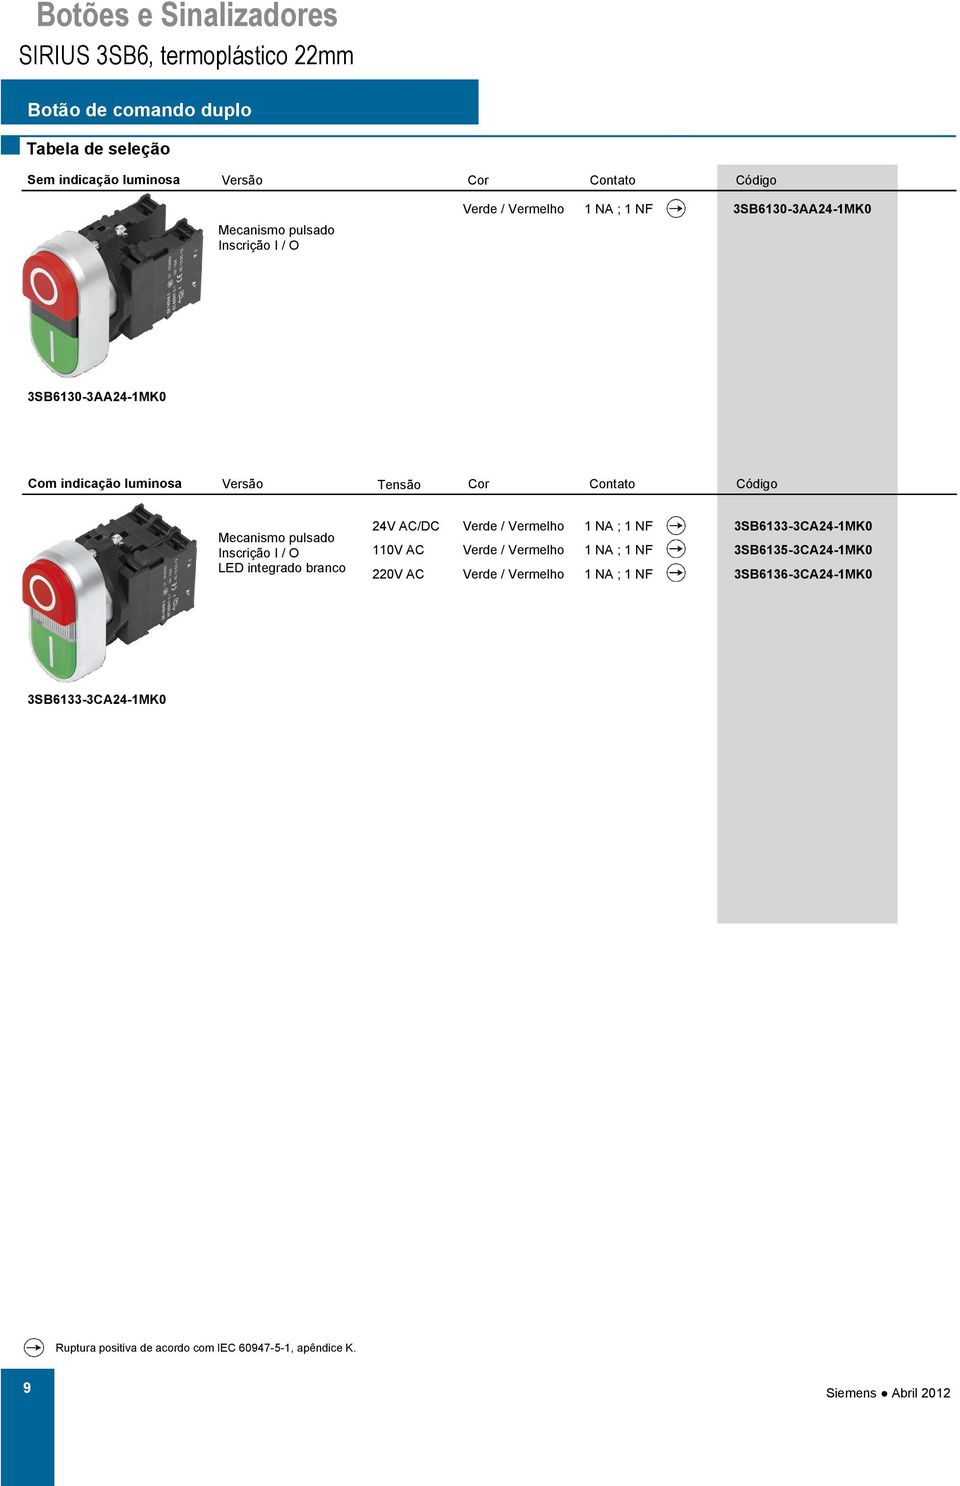 Inscrição I / O LED integrado branco 24V AC/DC / 1 NA ; 1 NF 3SB6133-3CA24-1MK0 110V AC / 1 NA ; 1 NF